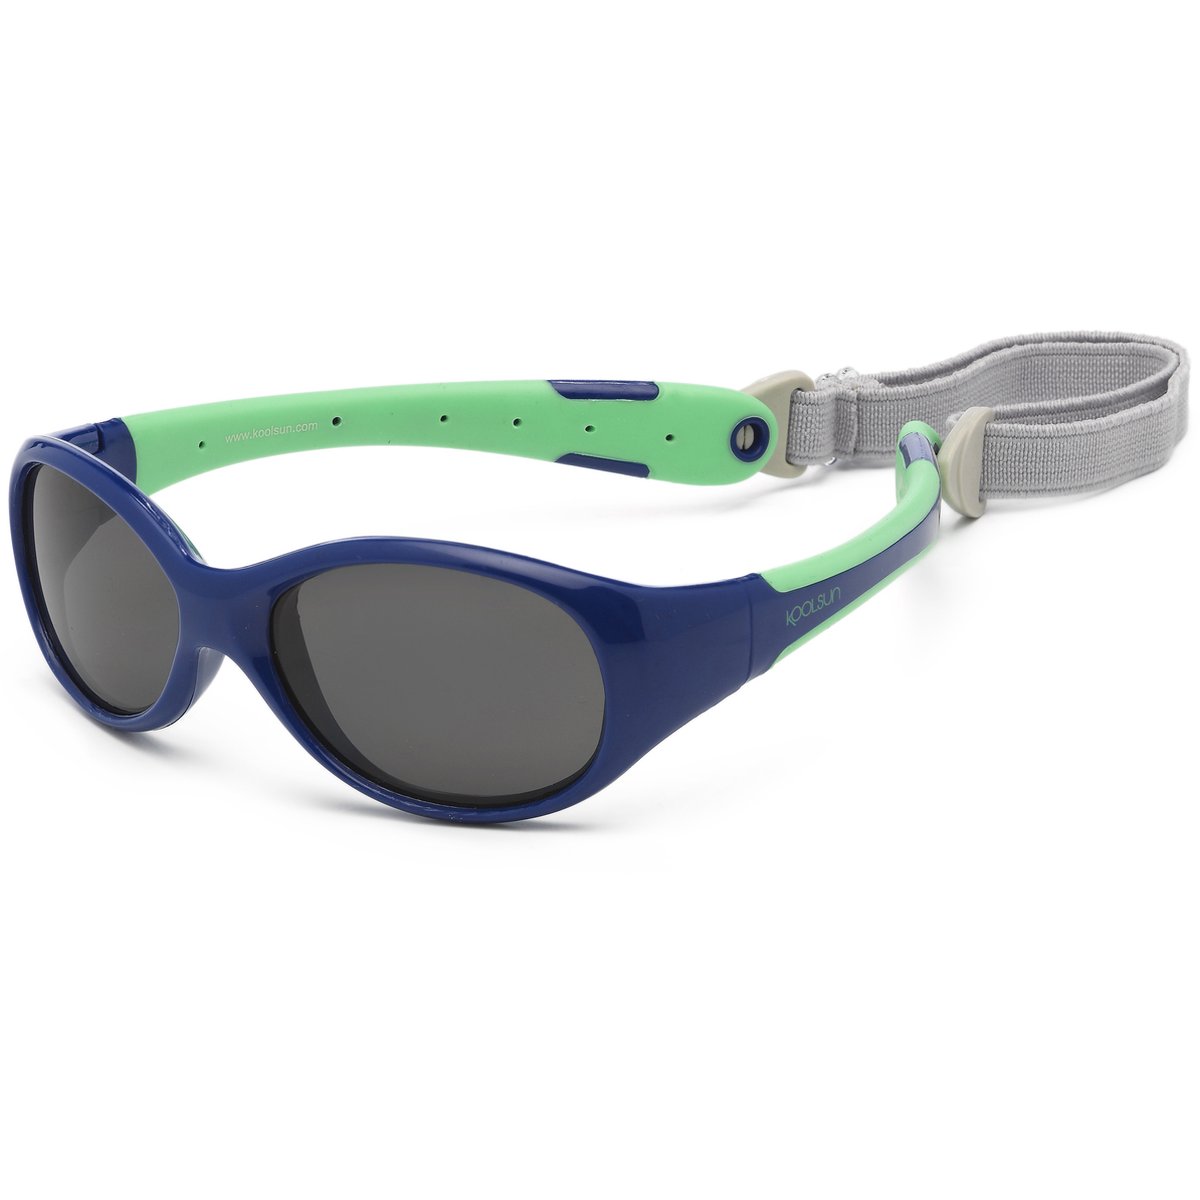 KOOLSUN - Flex - kinder zonnebril - Navy Groen - 3-6 jaar - UV400 Categorie 3